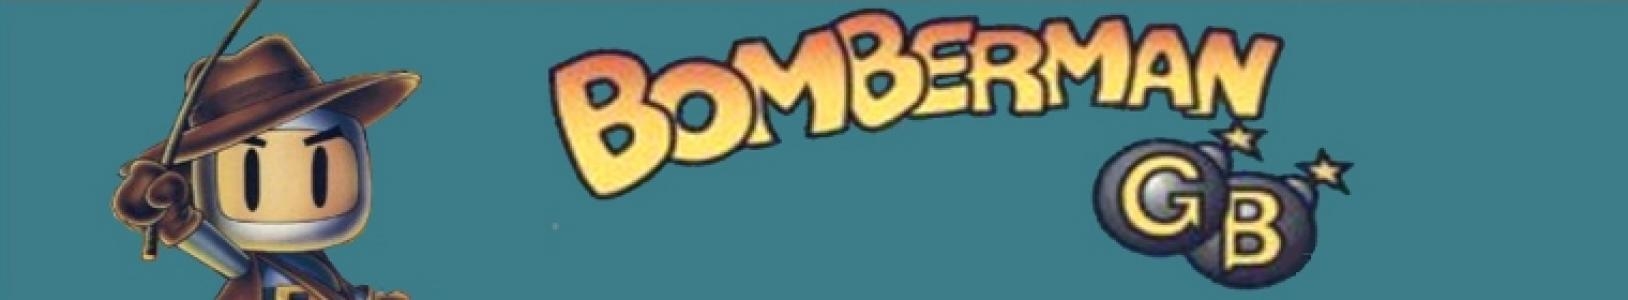 Banner Bomberman GB